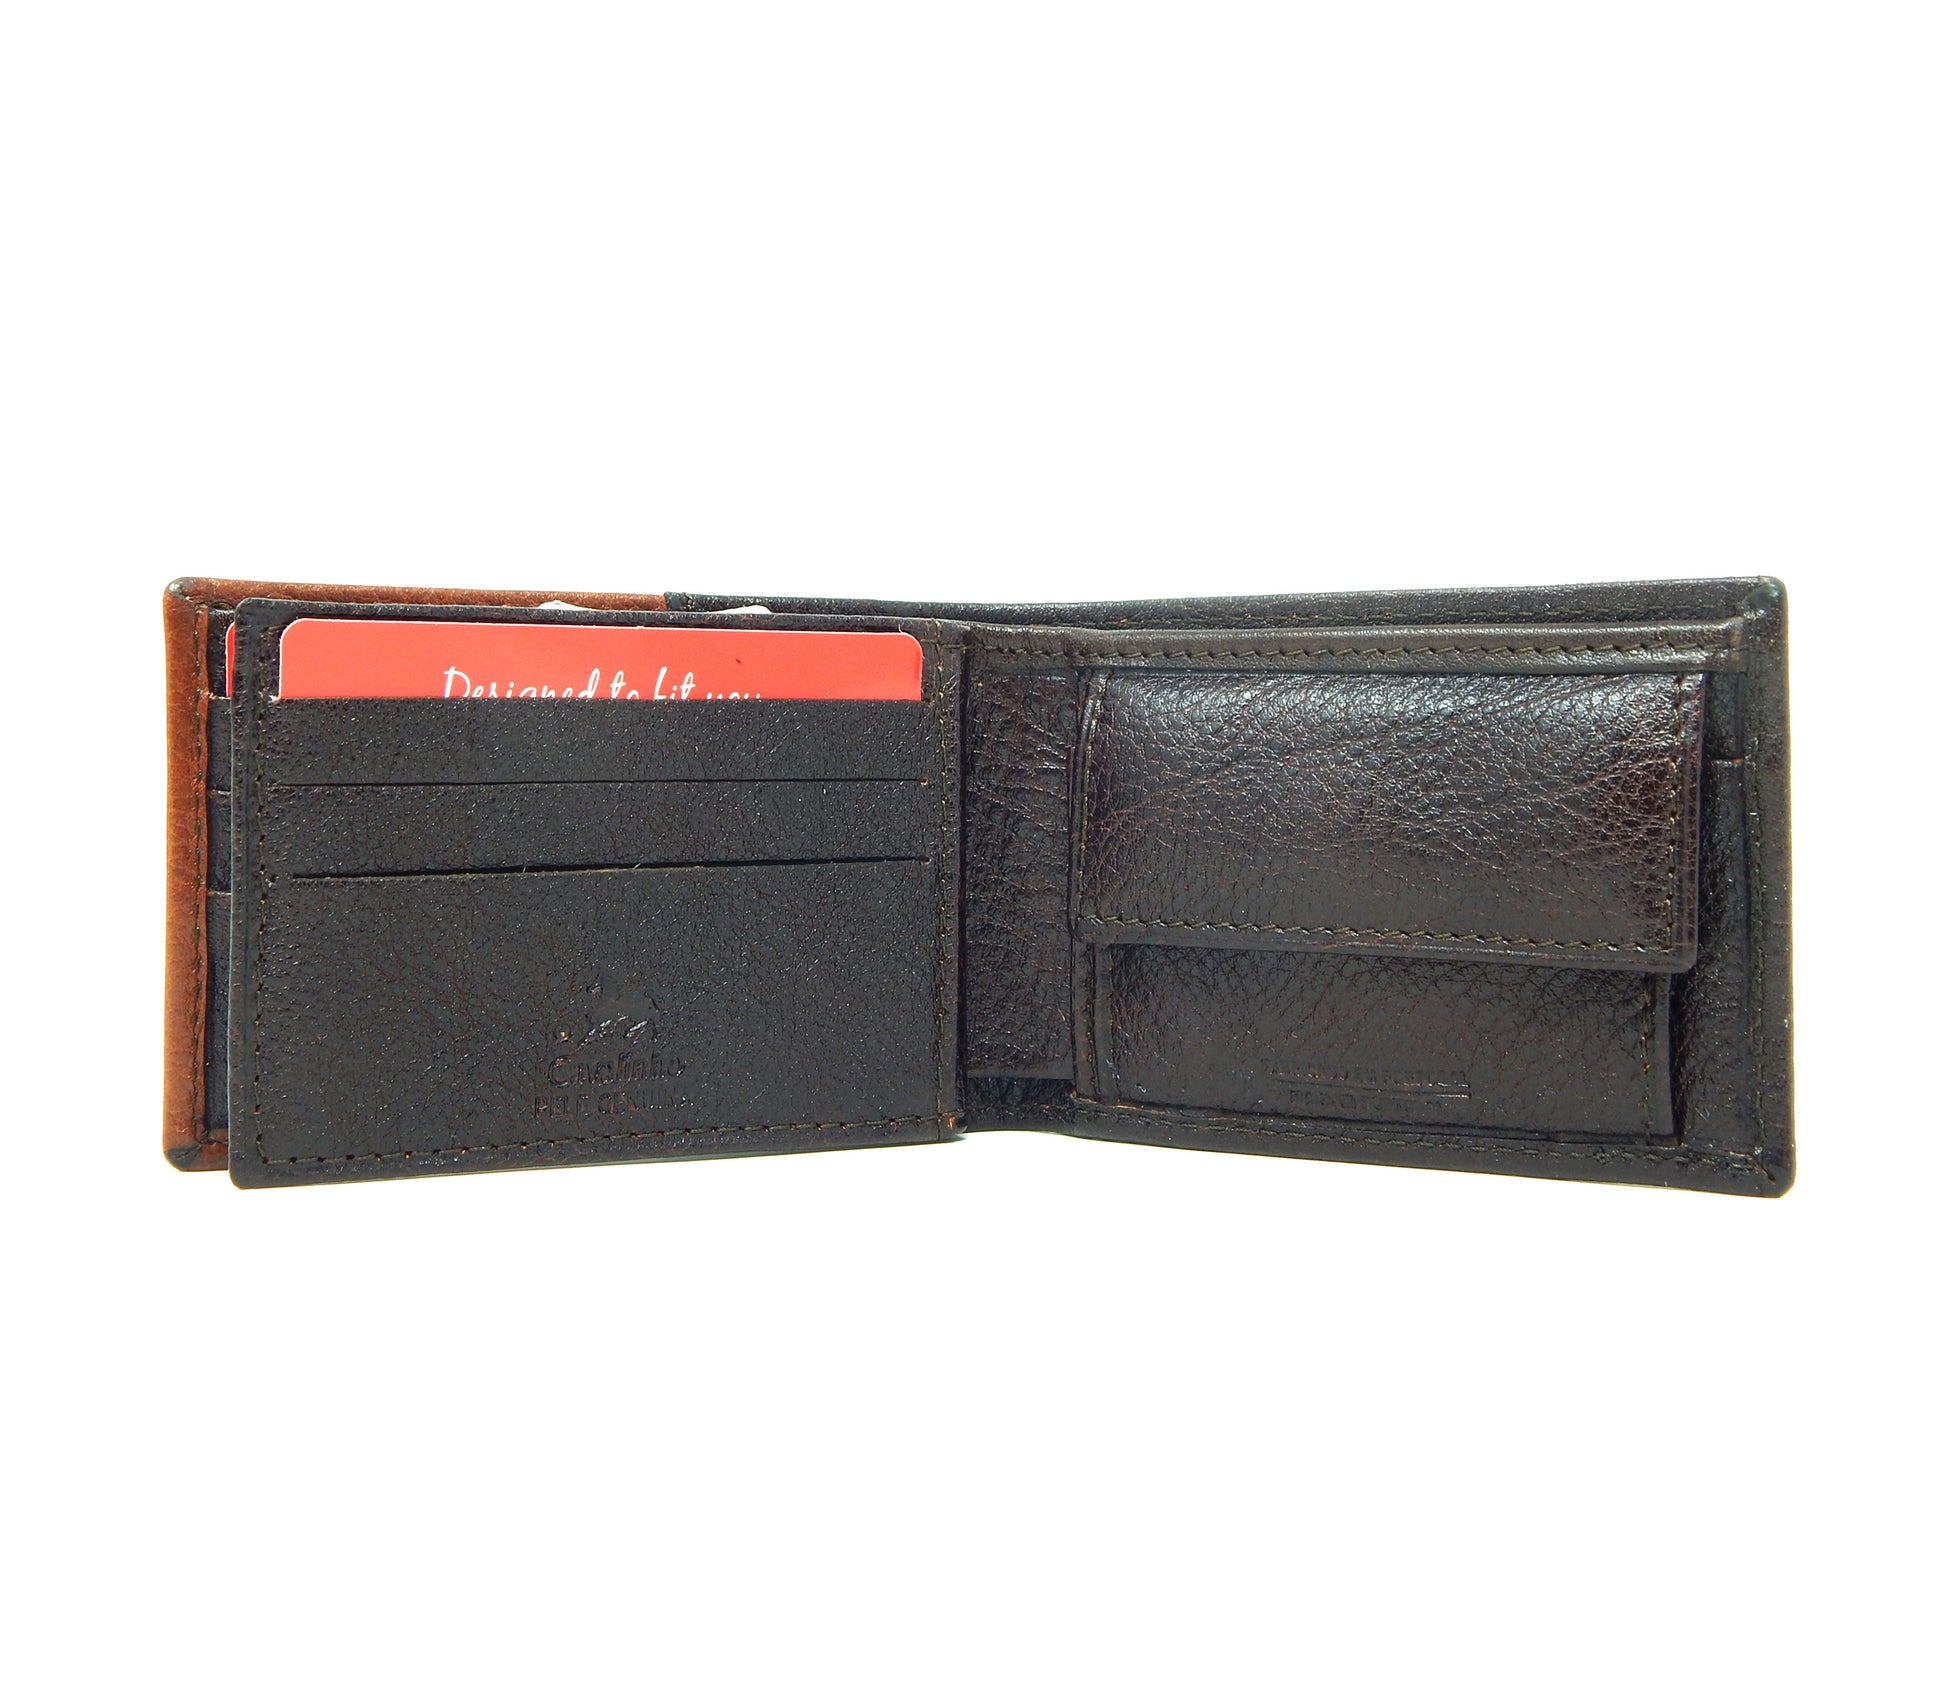 Cavalinho El Cavaleiro Bifold Leather Wallet - DarkBrown / SaddleBrown - 28650585.20.99_4